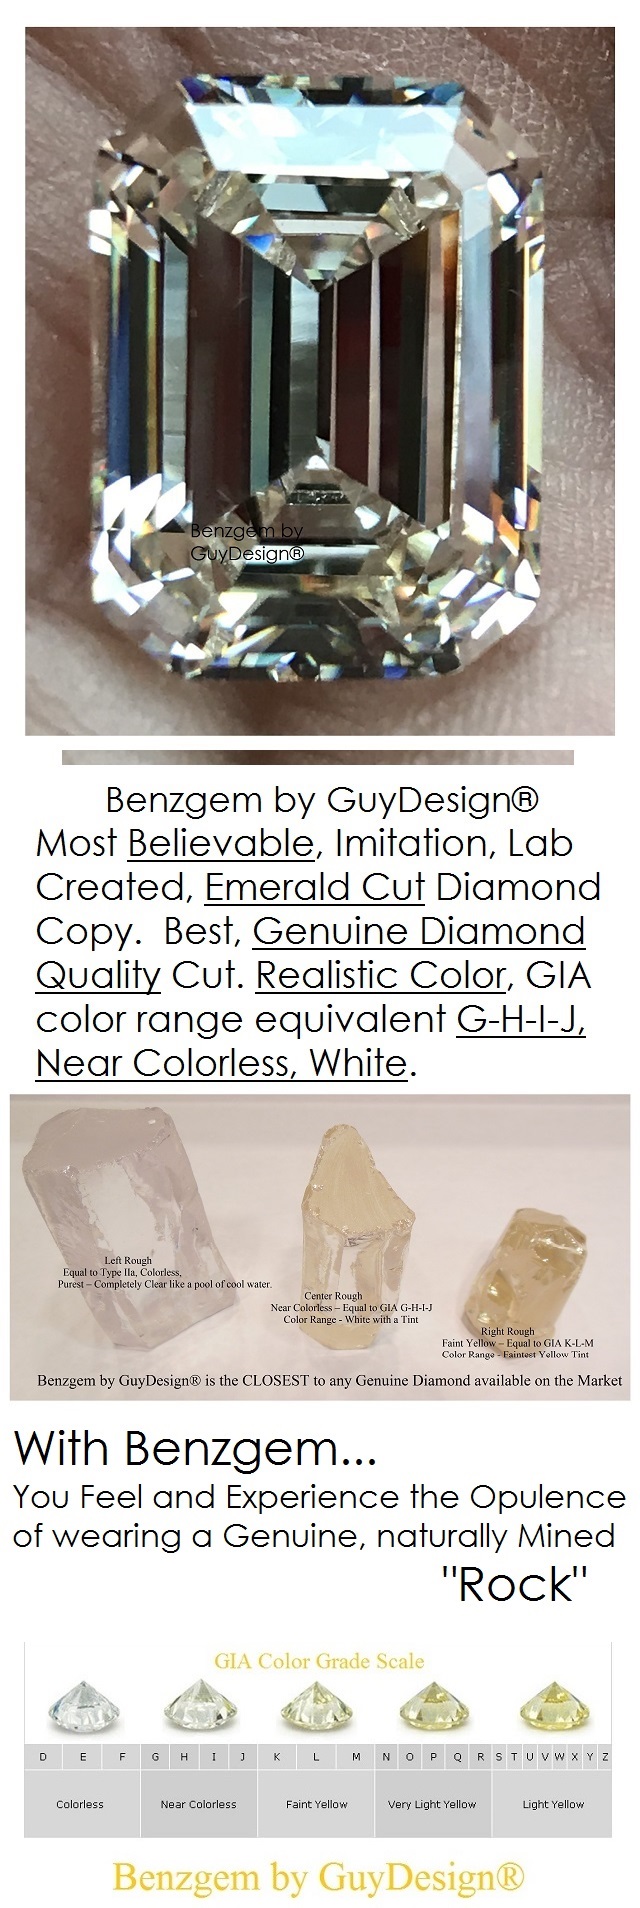 benzgem-by-guydesign-best-diamond-quality-cut-emerald-shape-g-h-i-j-color-640-x-761-pixels-description.jpg